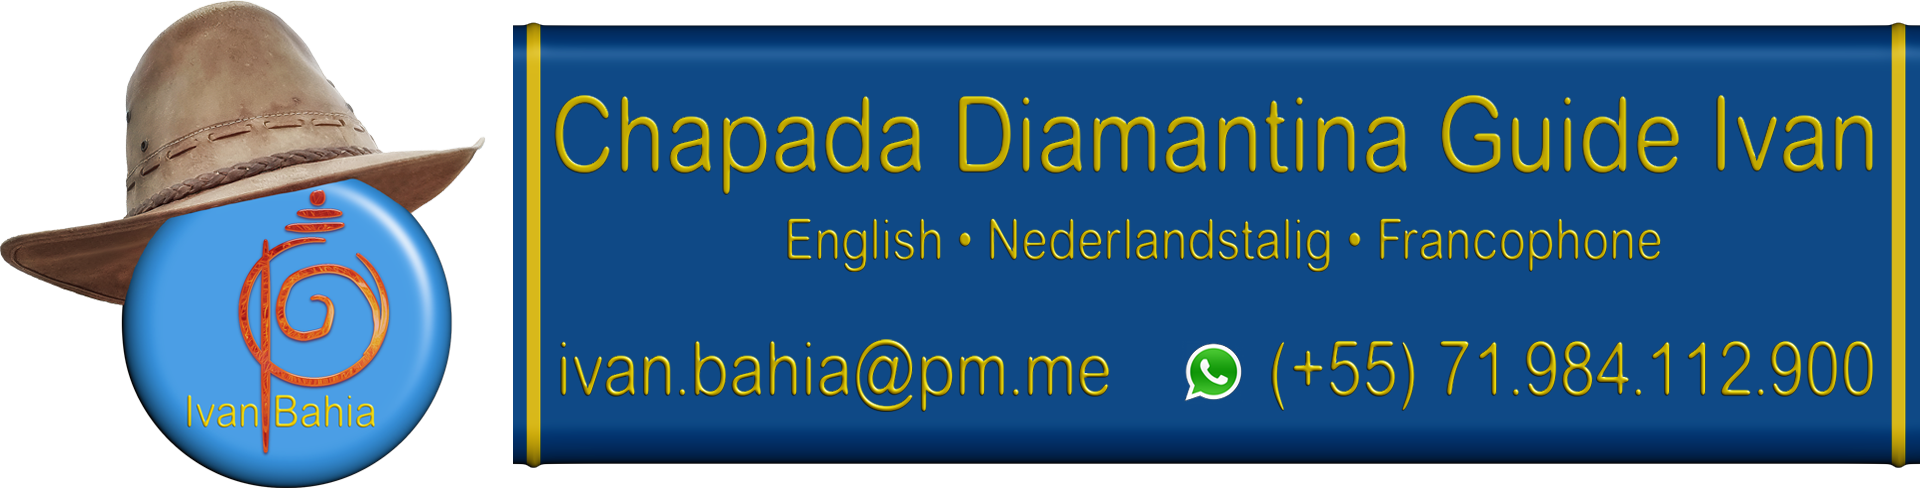 logo Ivan Bahia Guide Chapada Diamantina Brazil